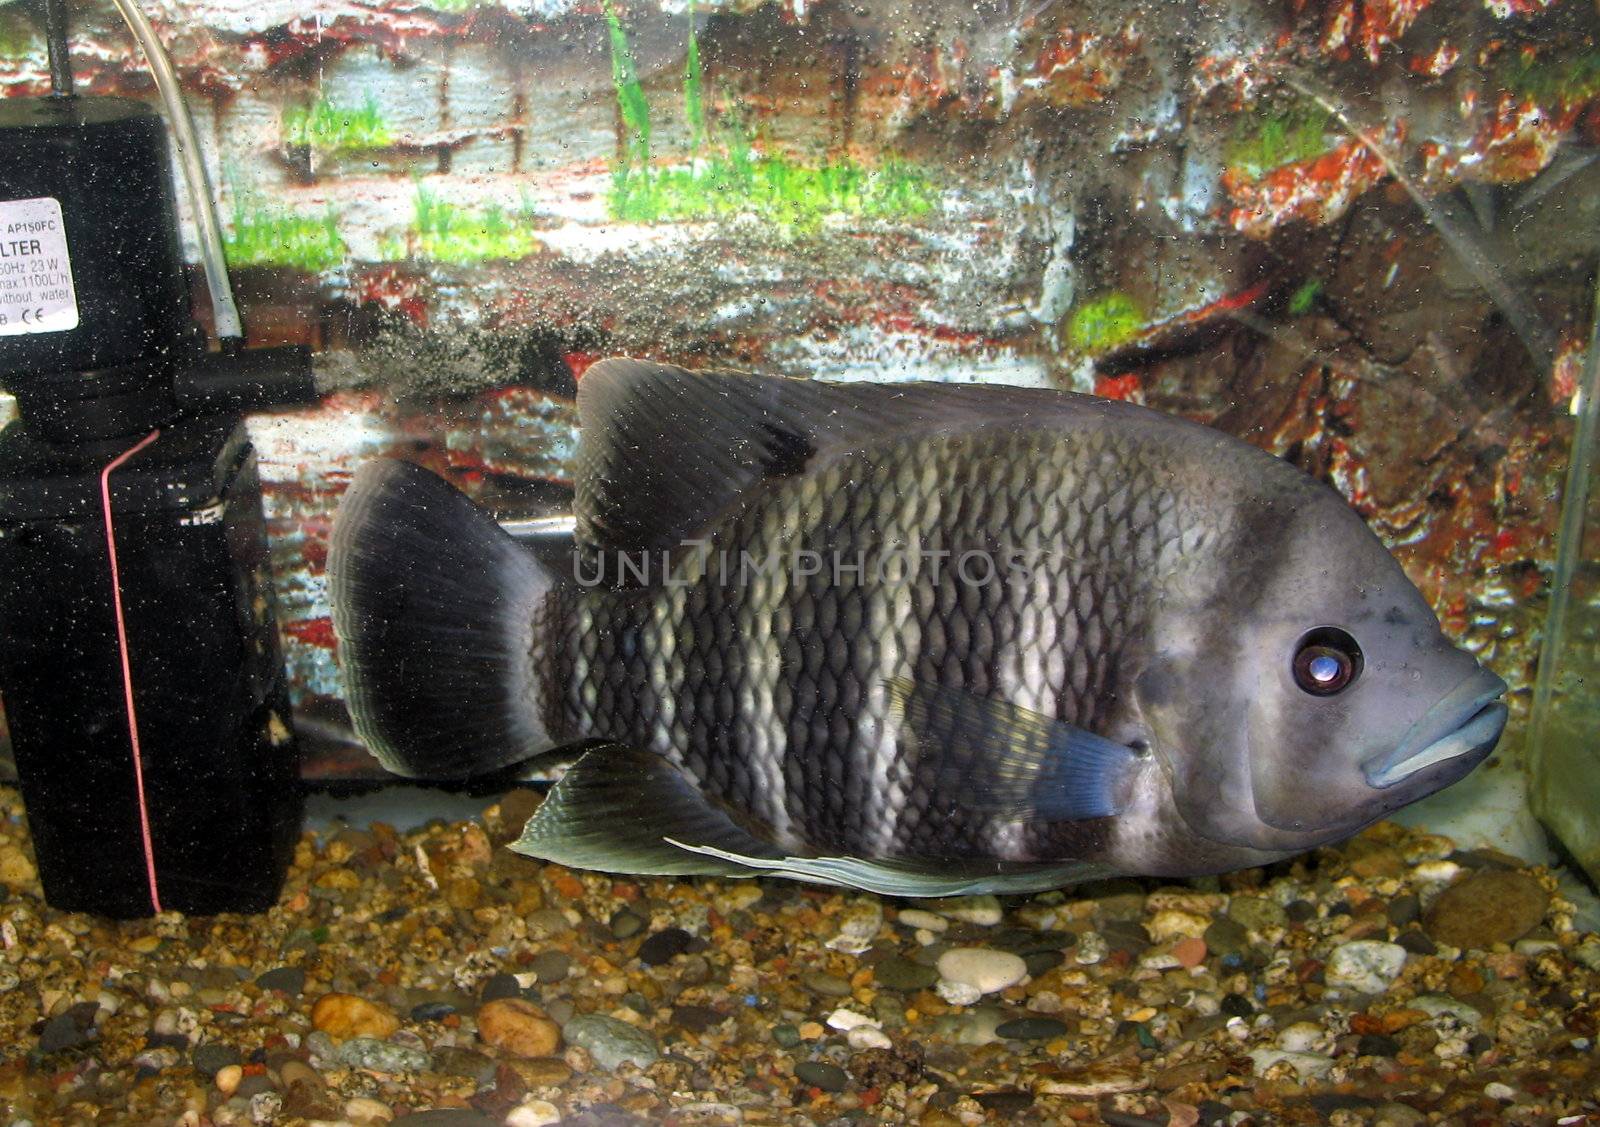 Striped fish floats in an aquarium by SergeAT